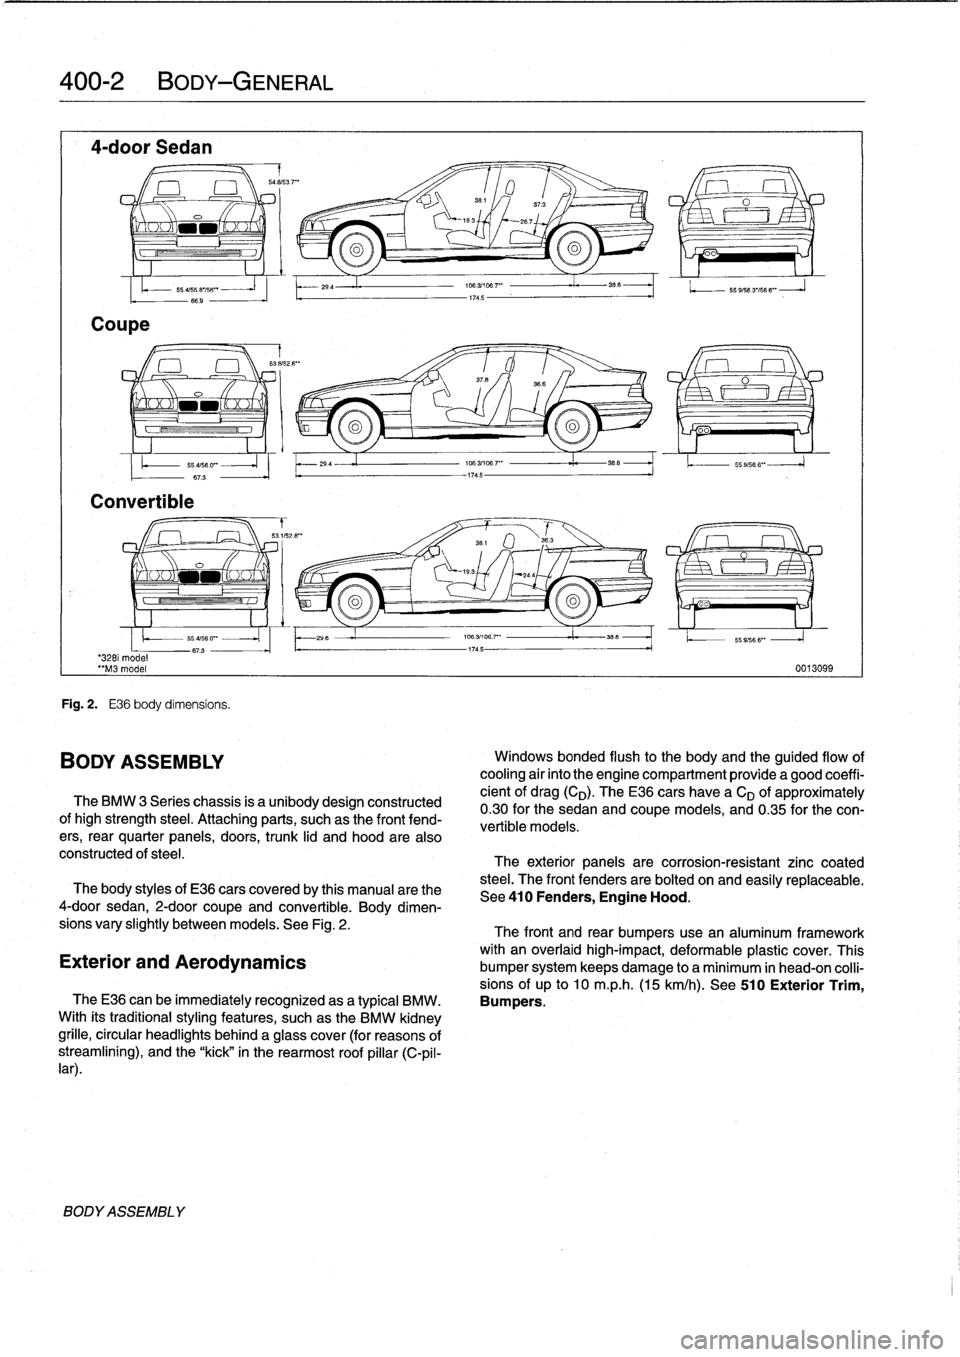 BMW 318i 1996 E36 Workshop Manual 
400-2
BODY-GENERAL

4-door
Sedan

Coupe

-
saas3
.7""

351
/

	

37
.3
O

	

I
x
`-193

	

267

o
oa

3281
model
"M3
model

Convertible

BODYASSEMBLY

55
ass
.e
iss
""
-
66
.9
-

Fig
.
2
.

	

E36
b